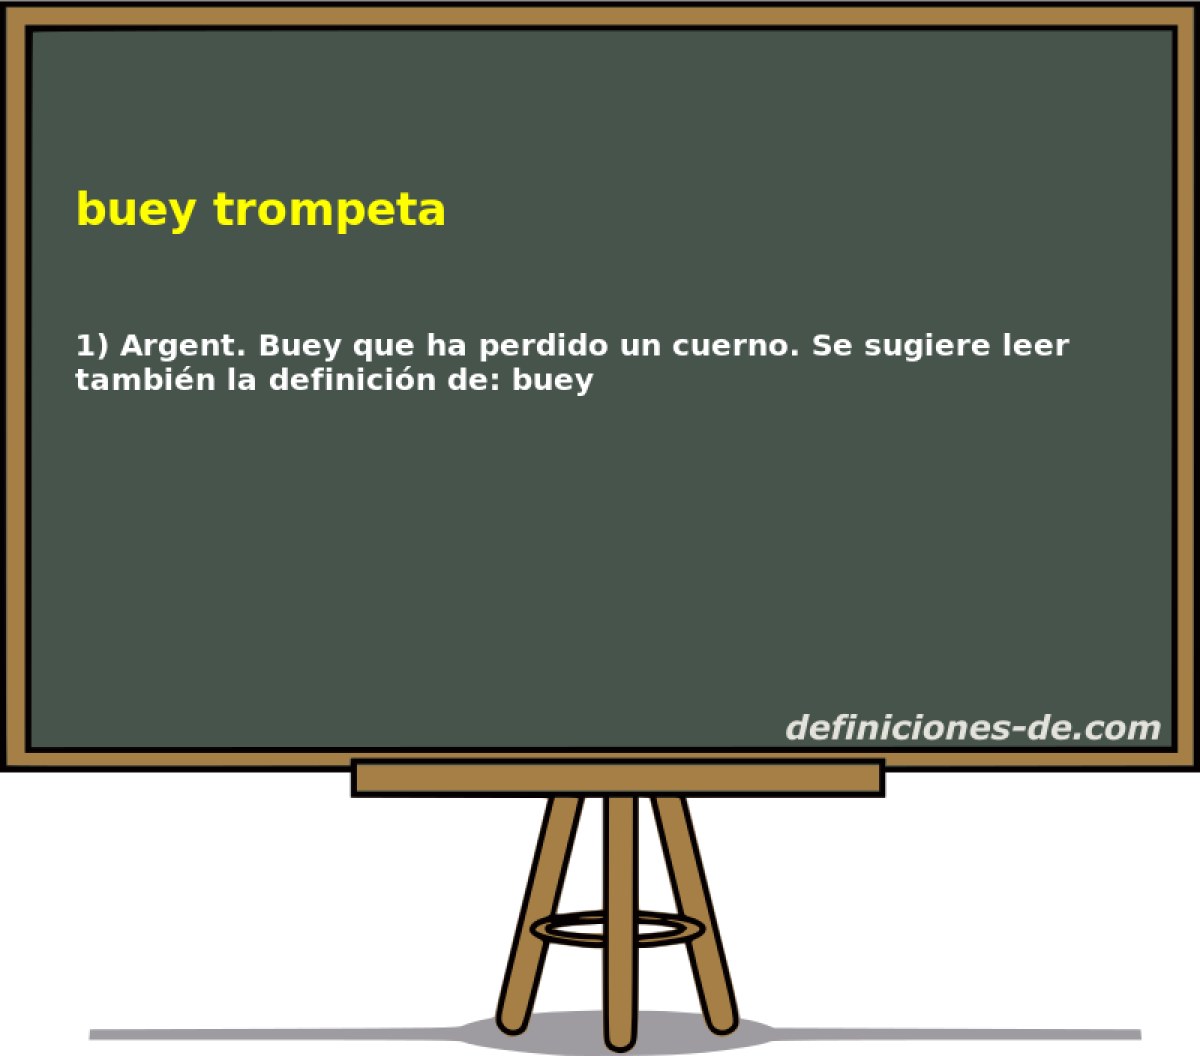 buey trompeta 